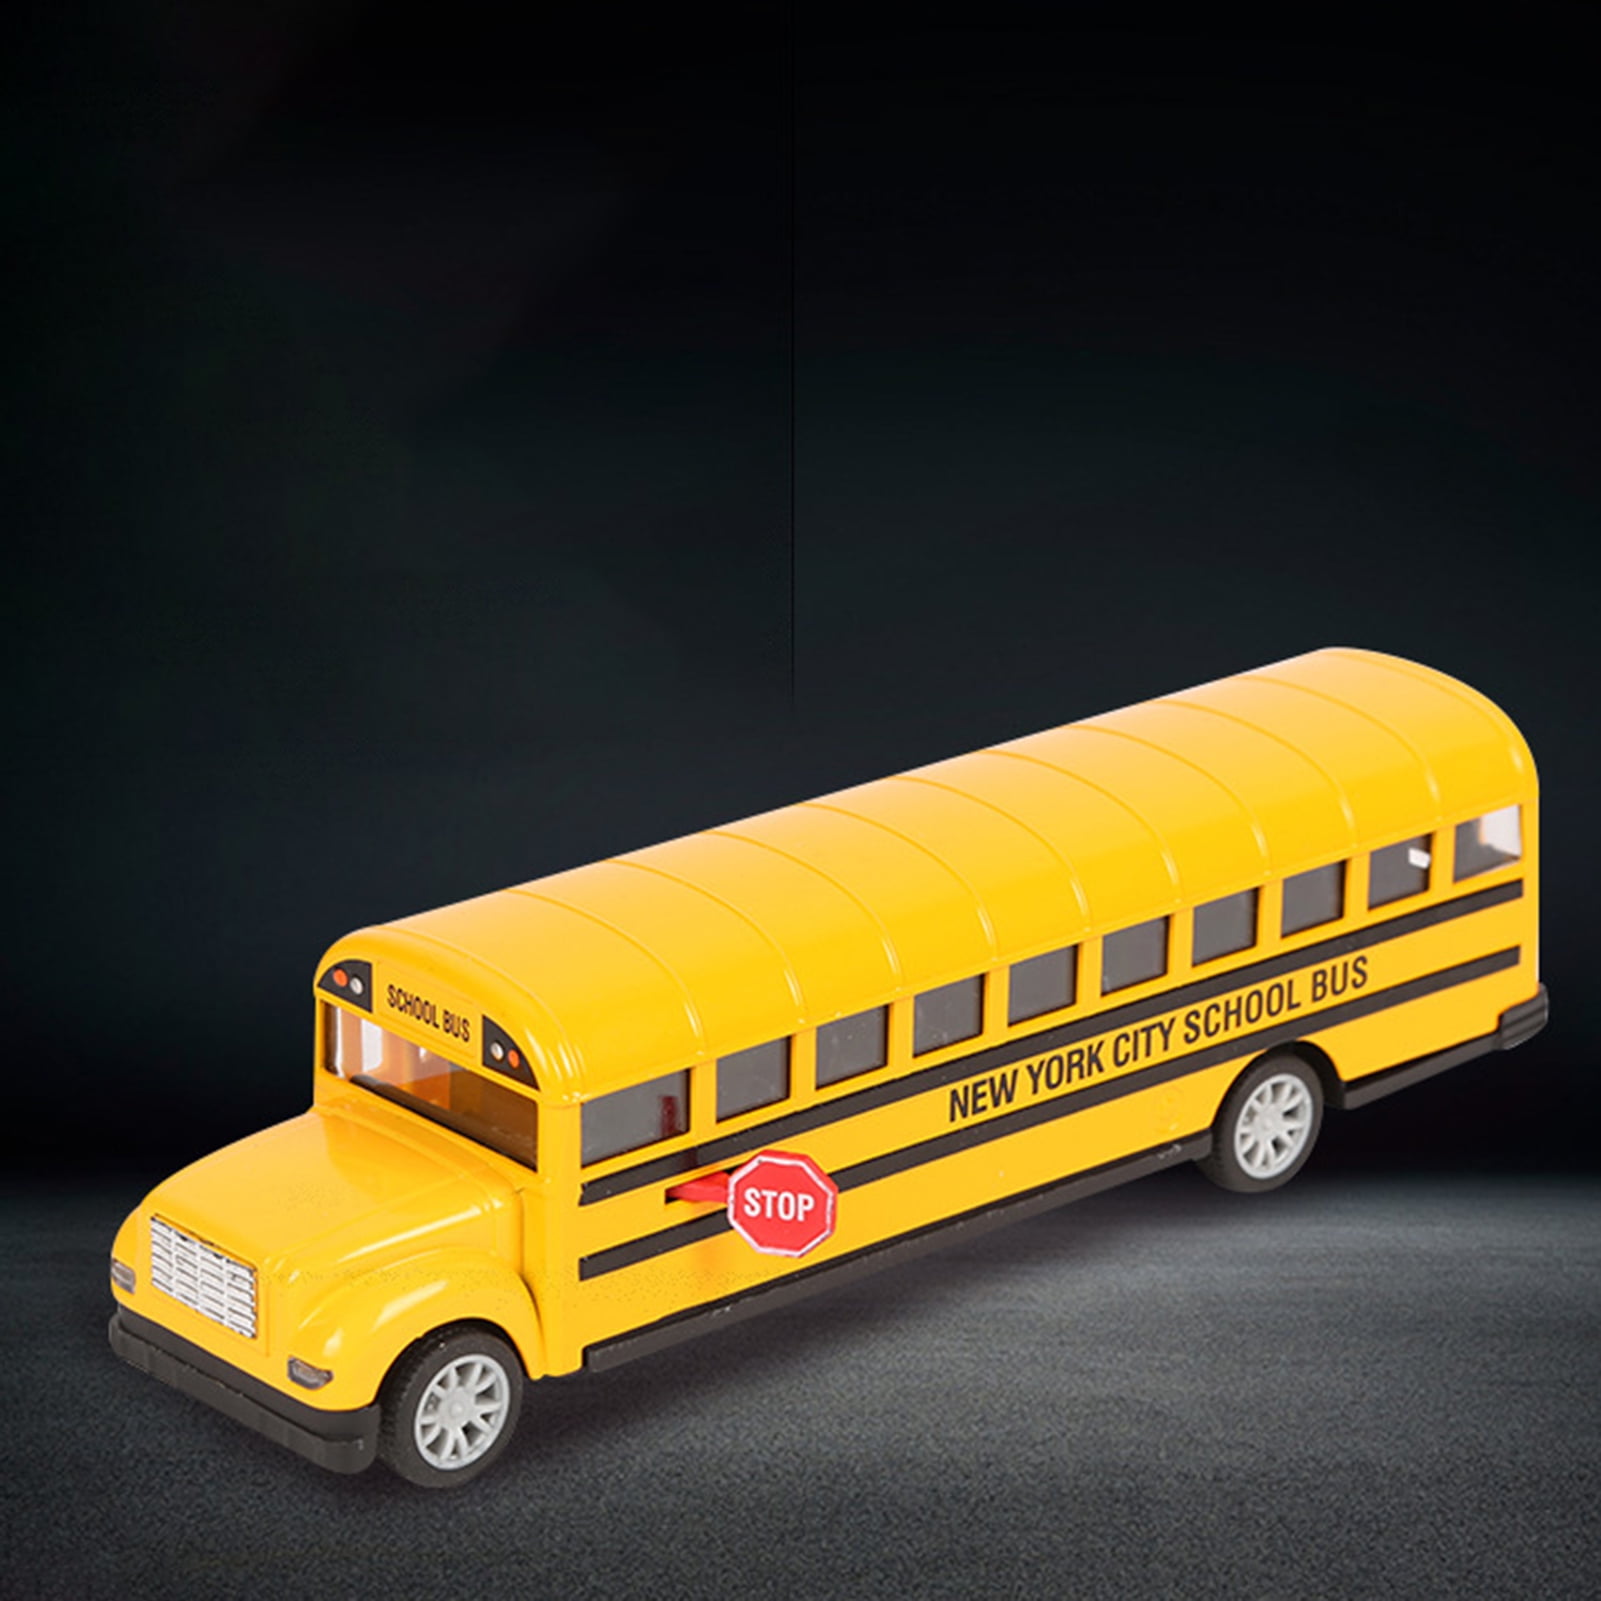 QS OEM Friction Plastic Shcool Bus Vehicle Tour Coach Car Bus for